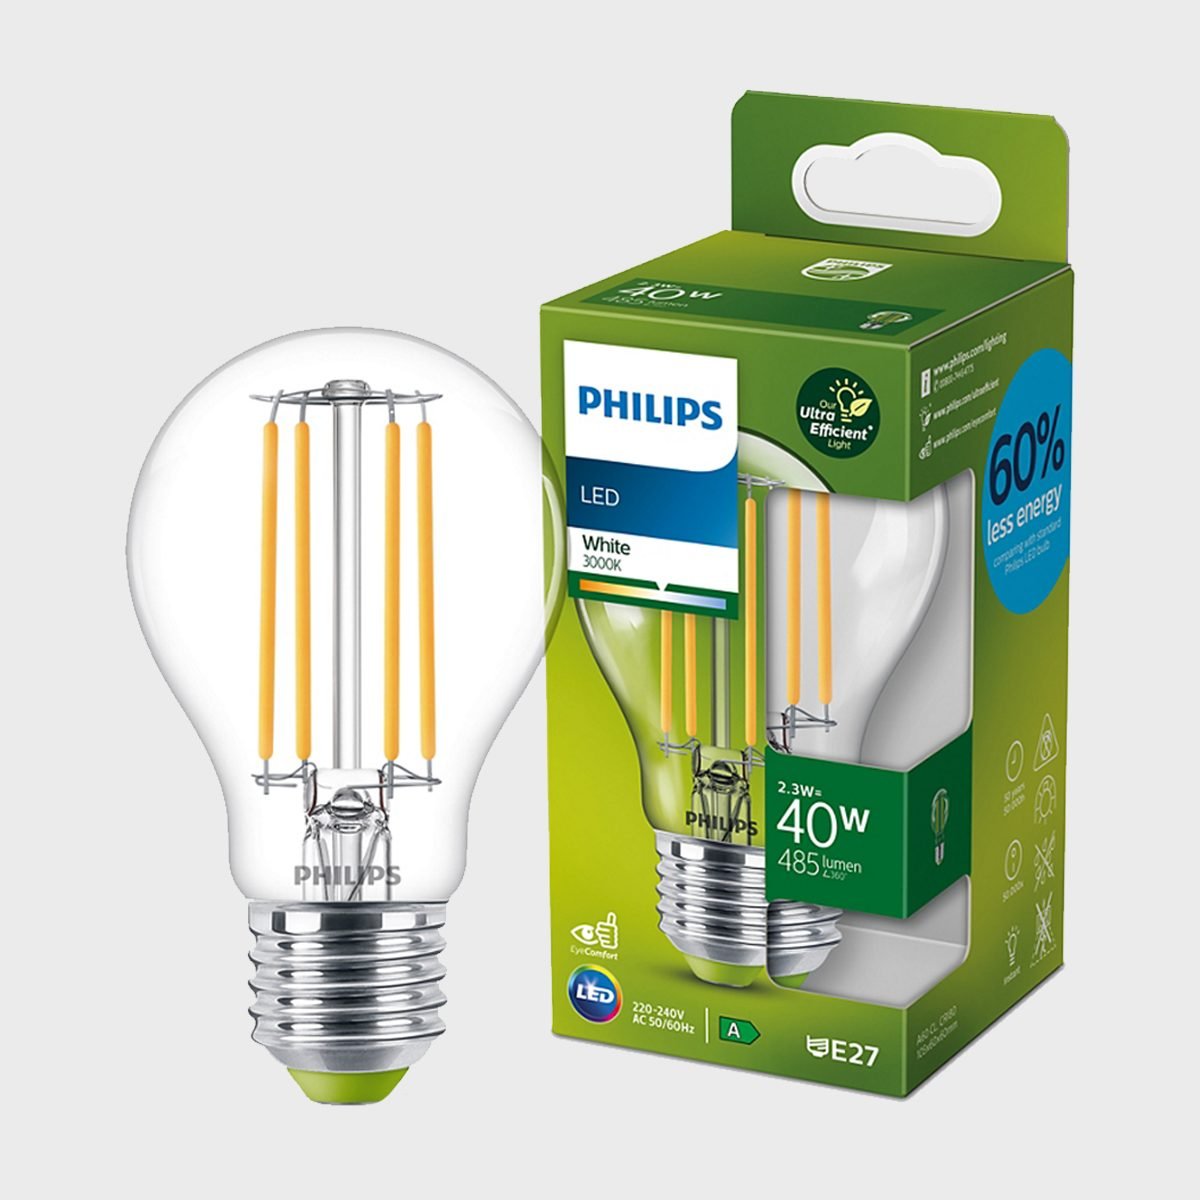 https://www.familyhandyman.com/wp-content/uploads/2021/09/Philips-LED-A-class-light-bulbs.jpg